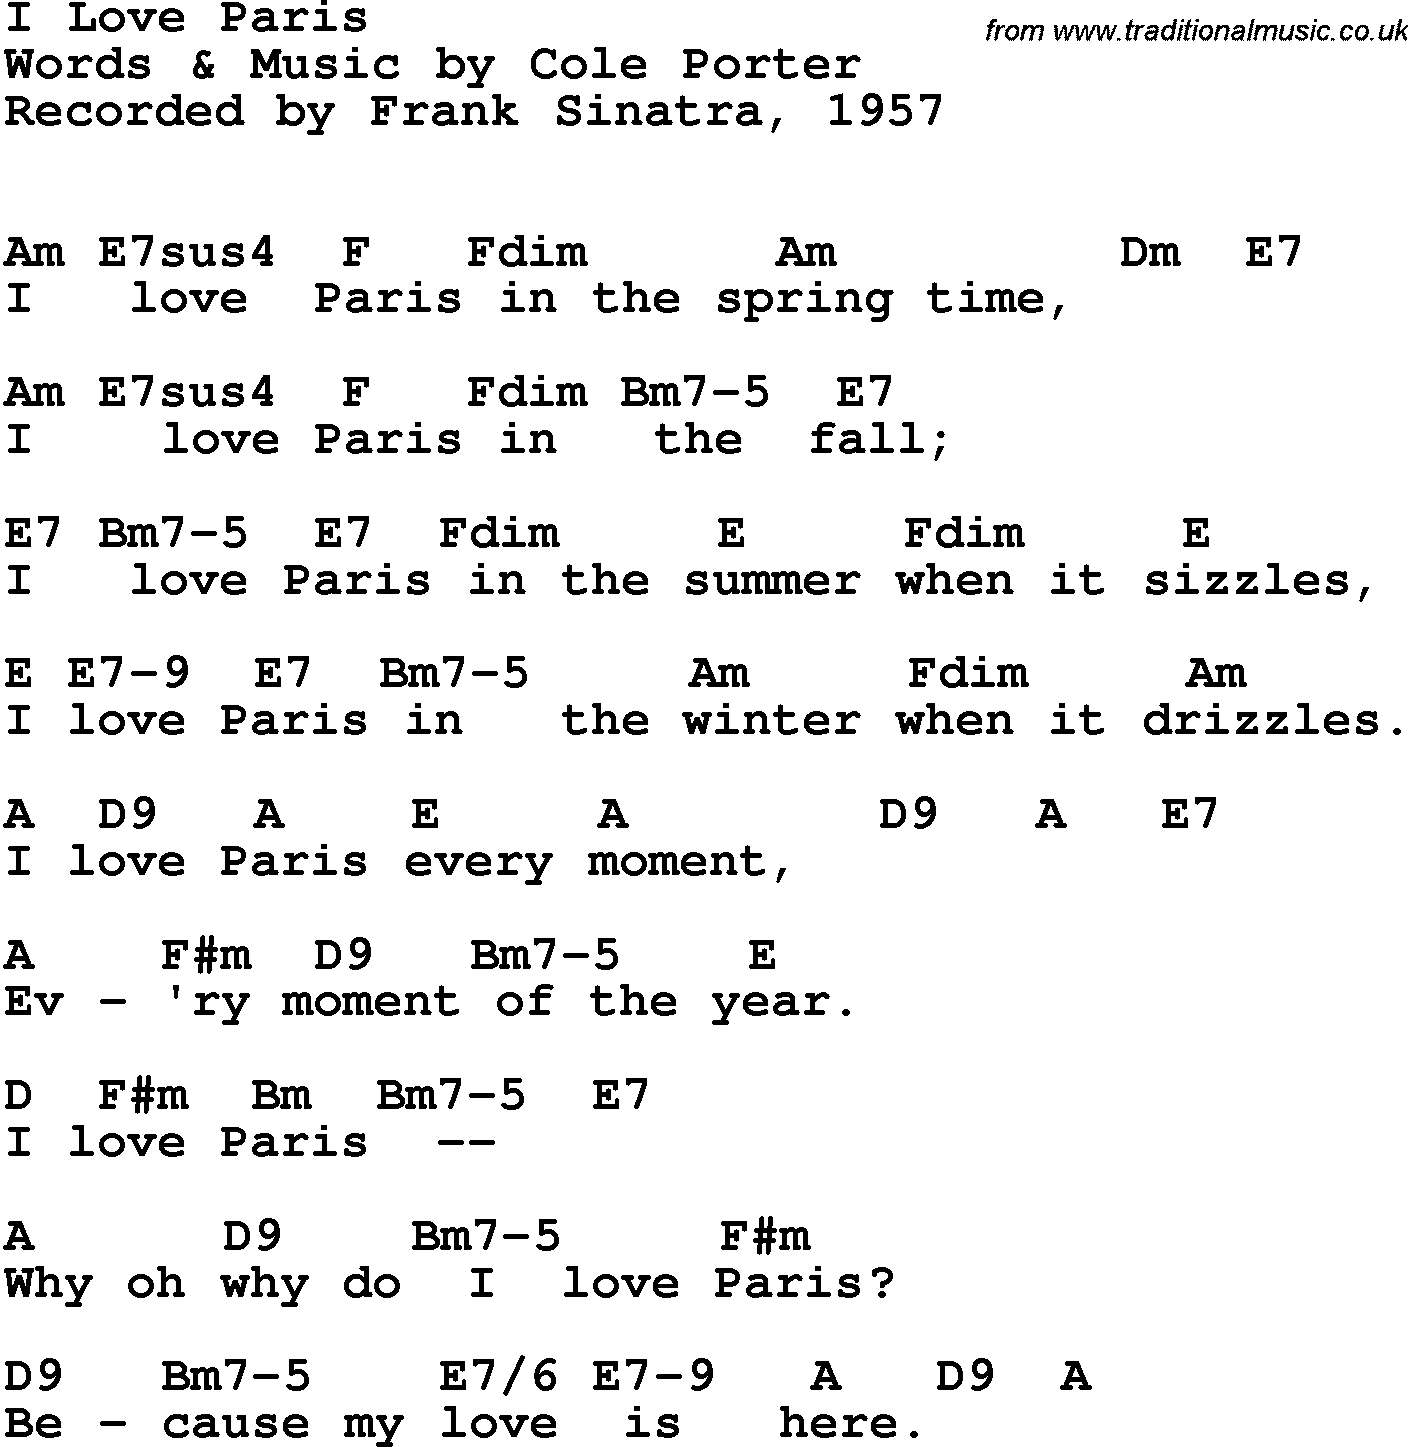 Song Lyrics with guitar chords for I Love Paris - Frank Sinatra, 1957